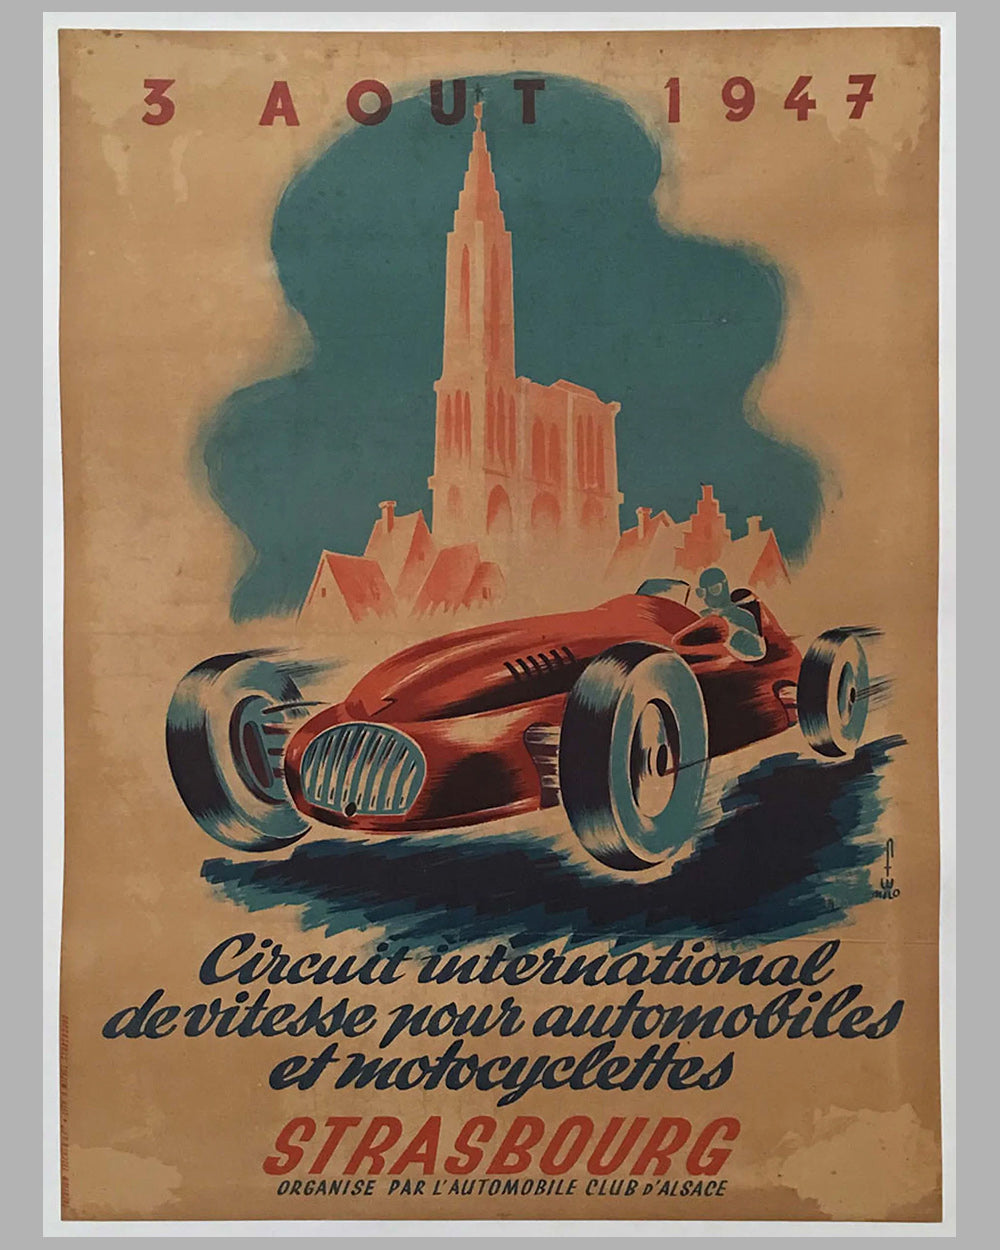 1947 Strasbourg Circuit International de vitesse pour automobiles et motorcycles original poster